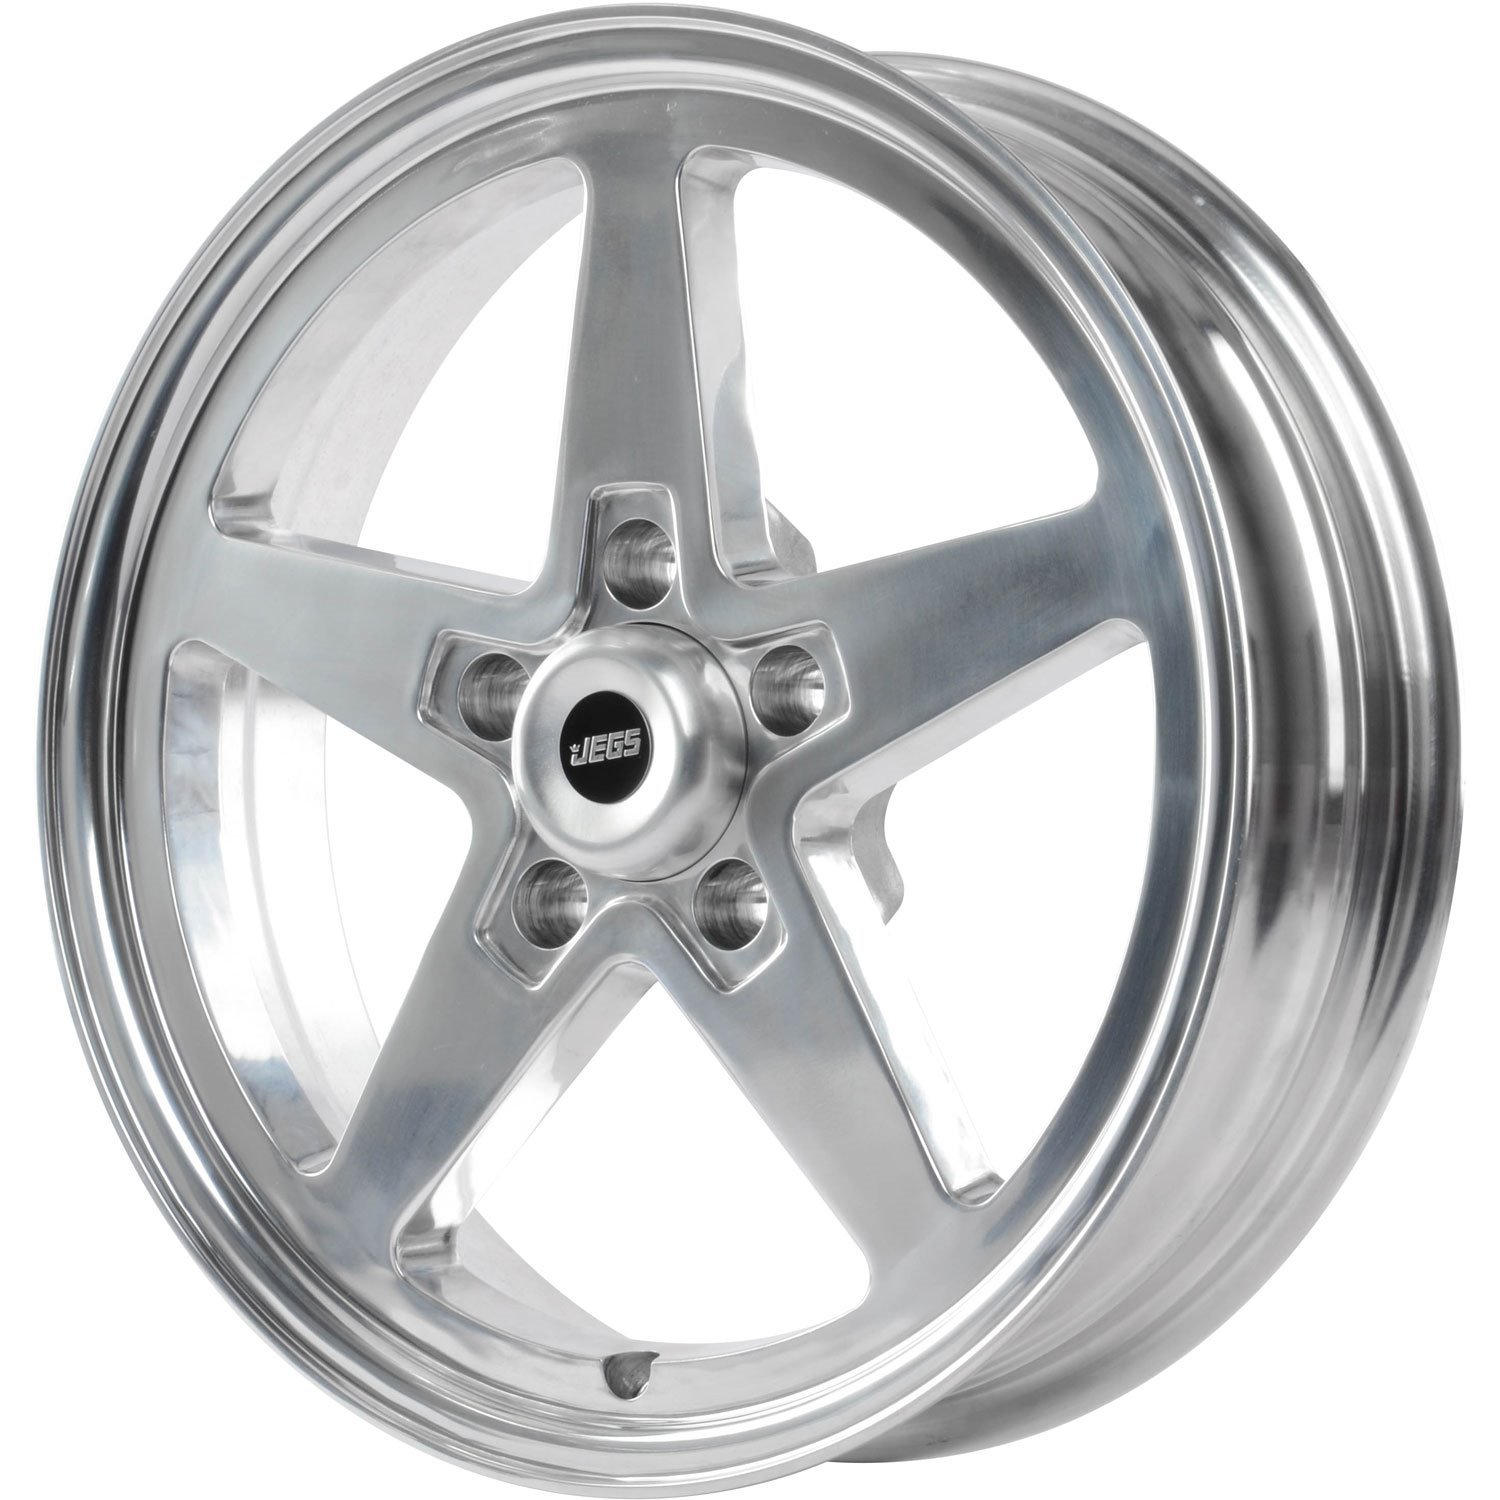 SSR Star Wheel [Size: 17" x 4.5"] Polished